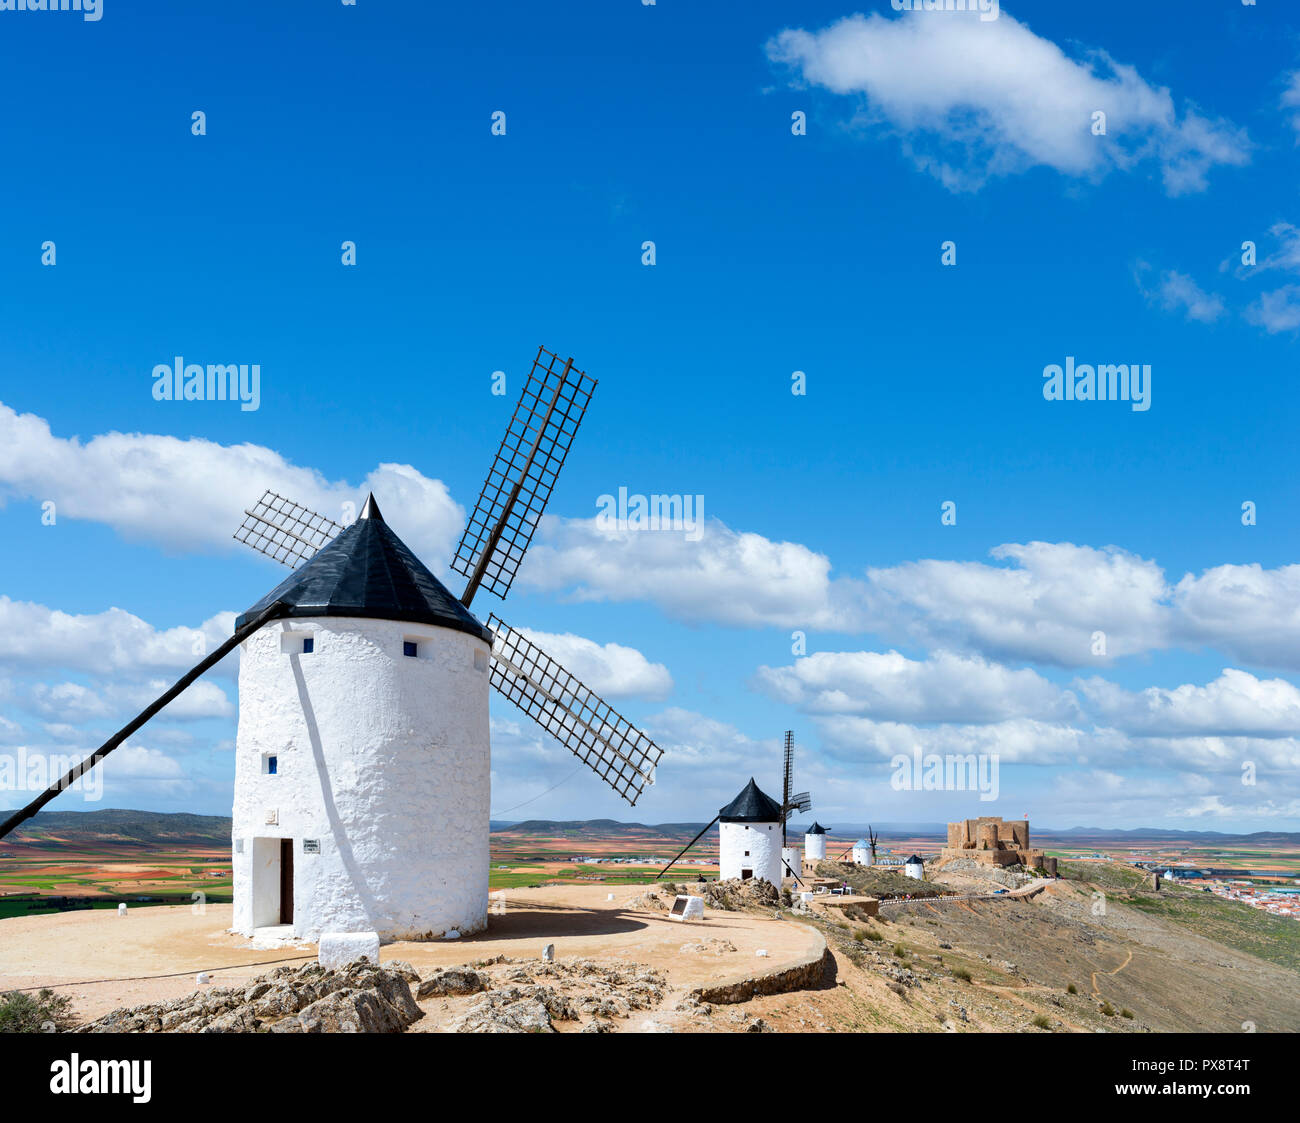 Don Quixote windmills. Traditional windmills in Consuegra, Castilla La Mancha, Spain Stock Photo